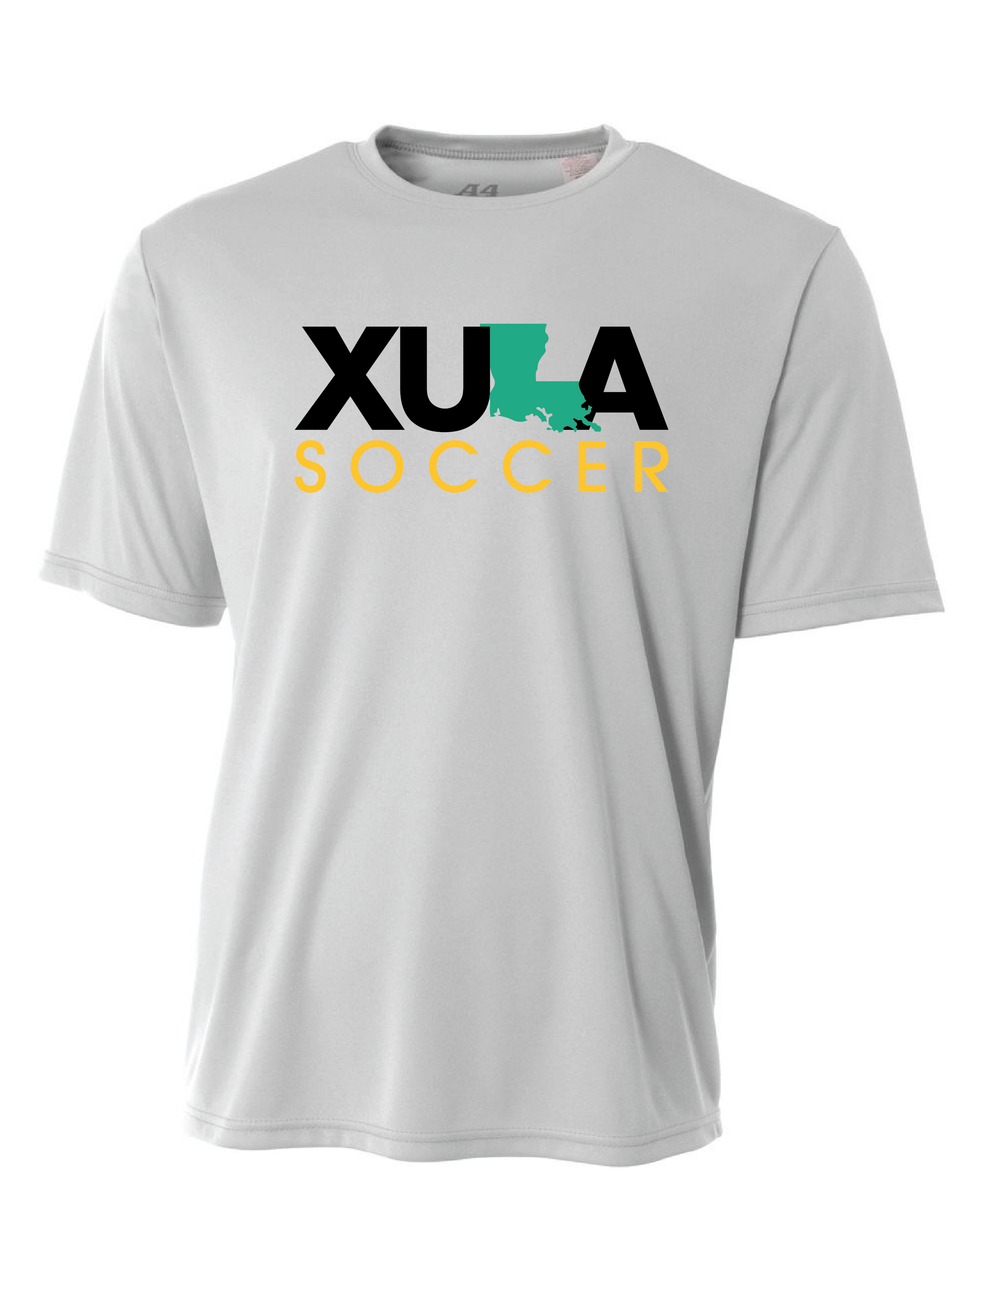 XULA Soccer Short-Sleeve Performance Shirt Xavier University Sport Grey Mens Small - Third Coast Soccer